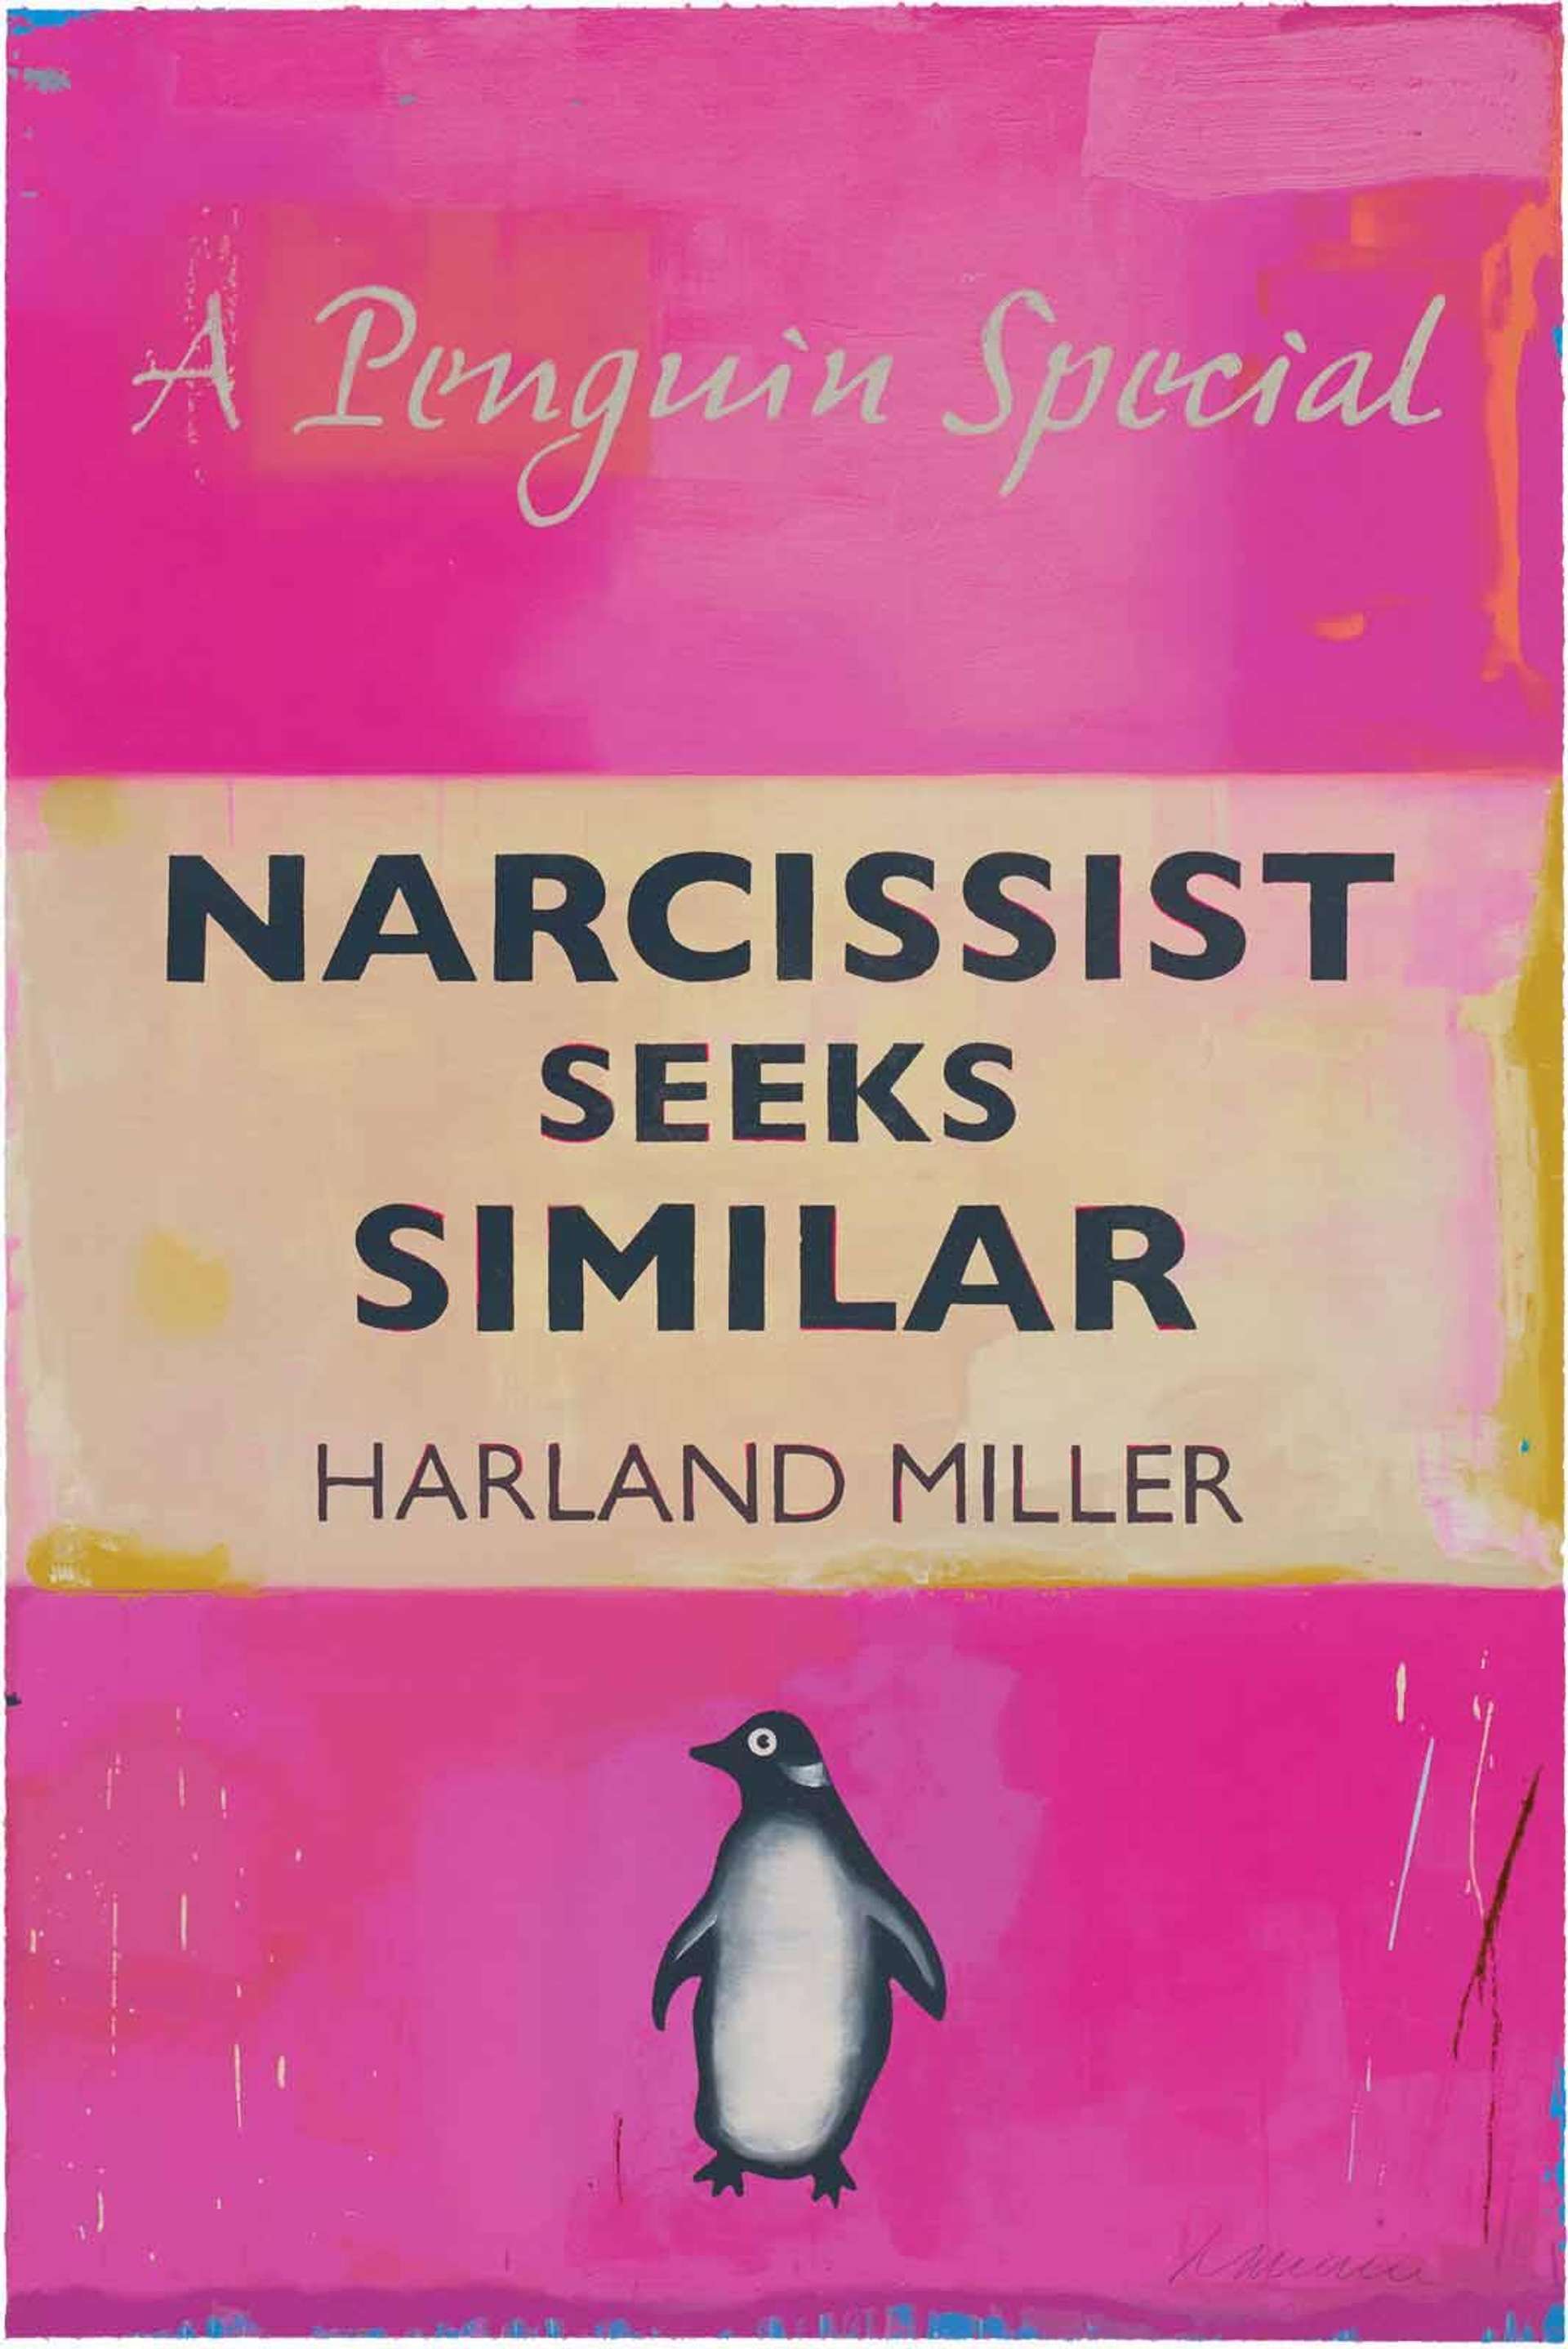 Narcissist Seeks Similar by Harland Miller - MyArtBroker 